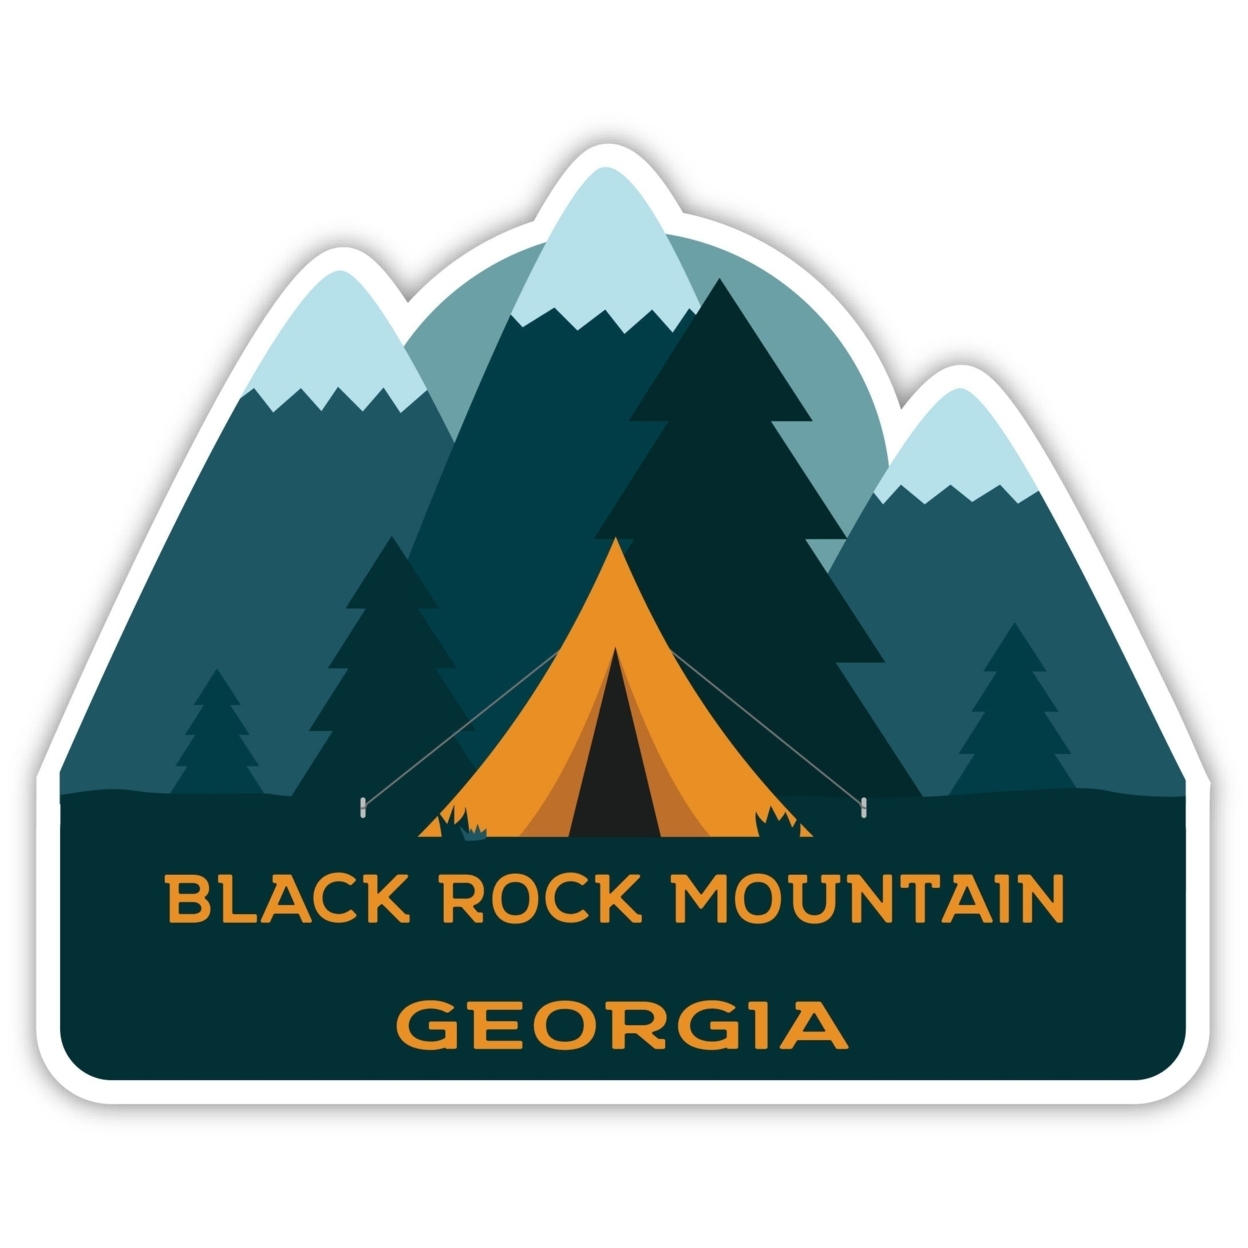 Black Rock Mountain Georgia Souvenir Decorative Stickers (Choose Theme And Size) - Single Unit, 2-Inch, Tent